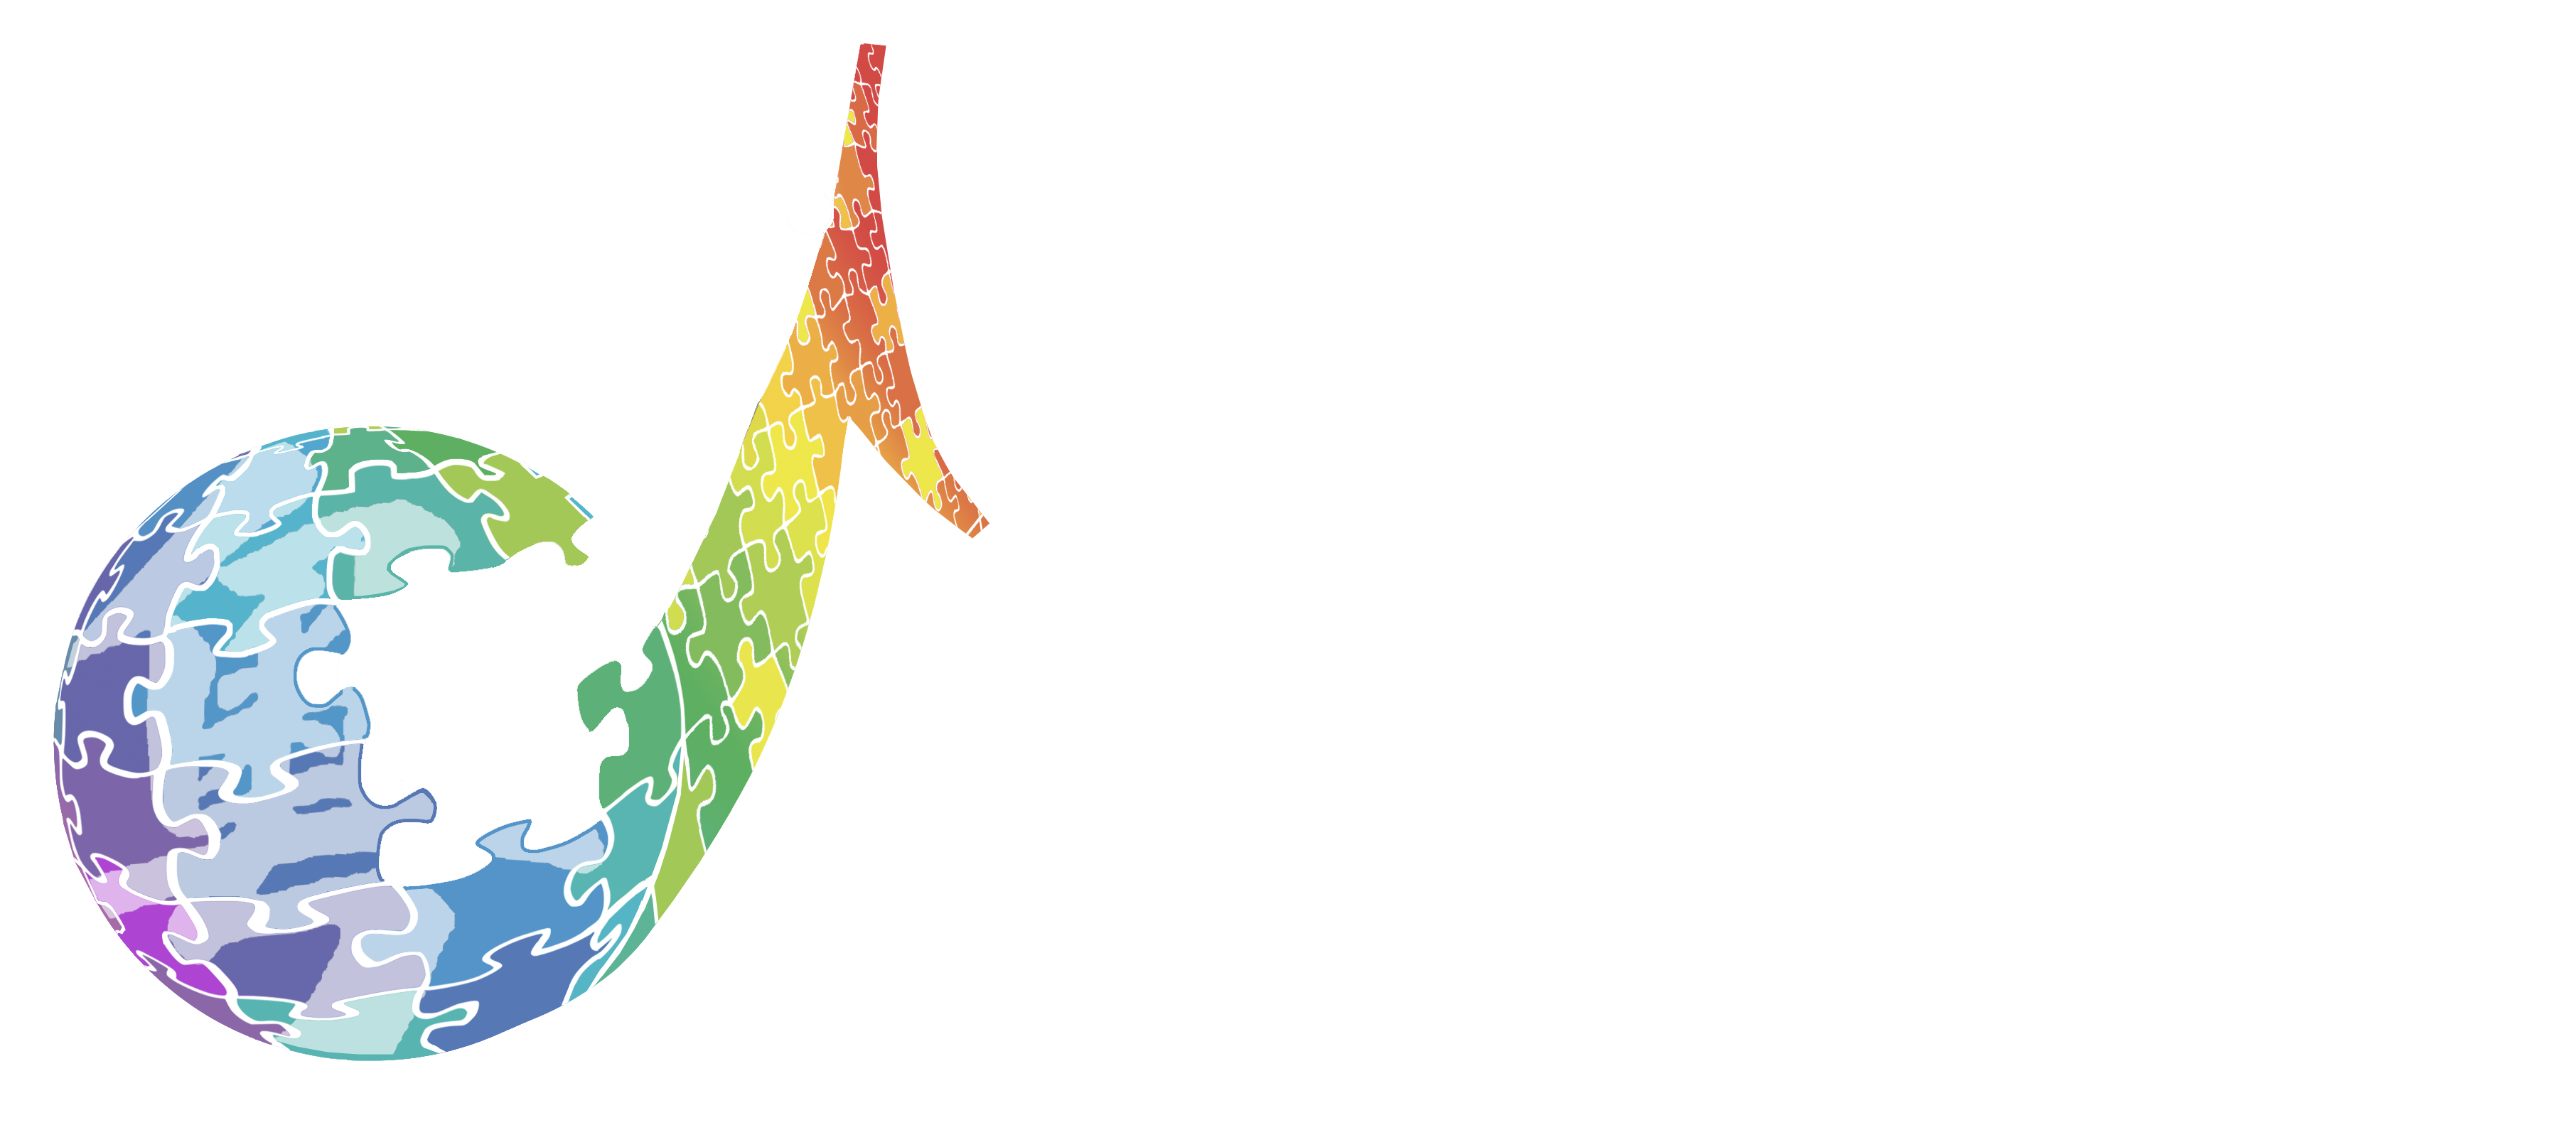 CantonHymn